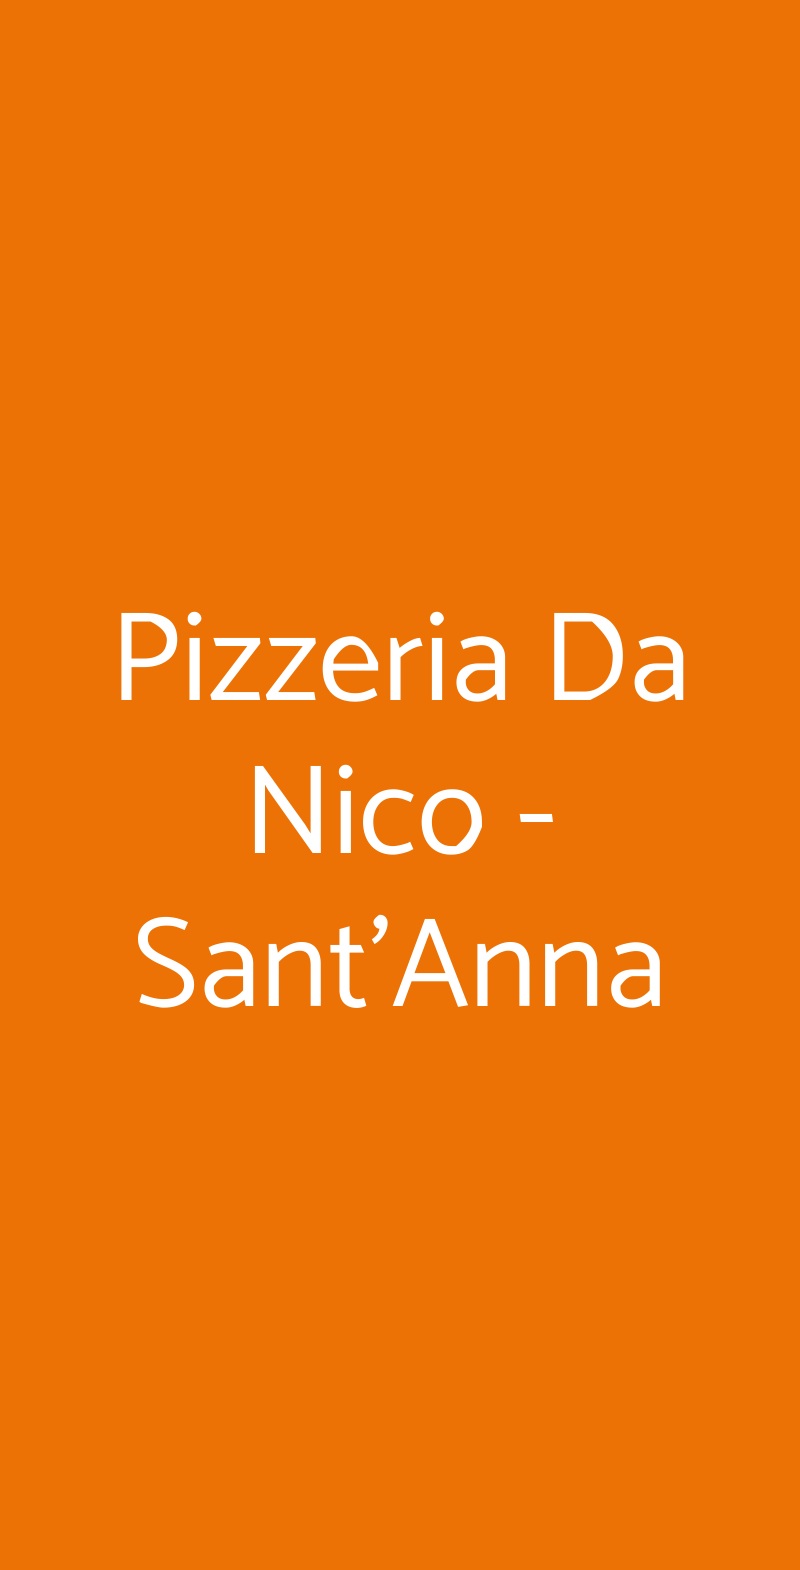 Pizzeria Da Nico - Sant'Anna Bari menù 1 pagina